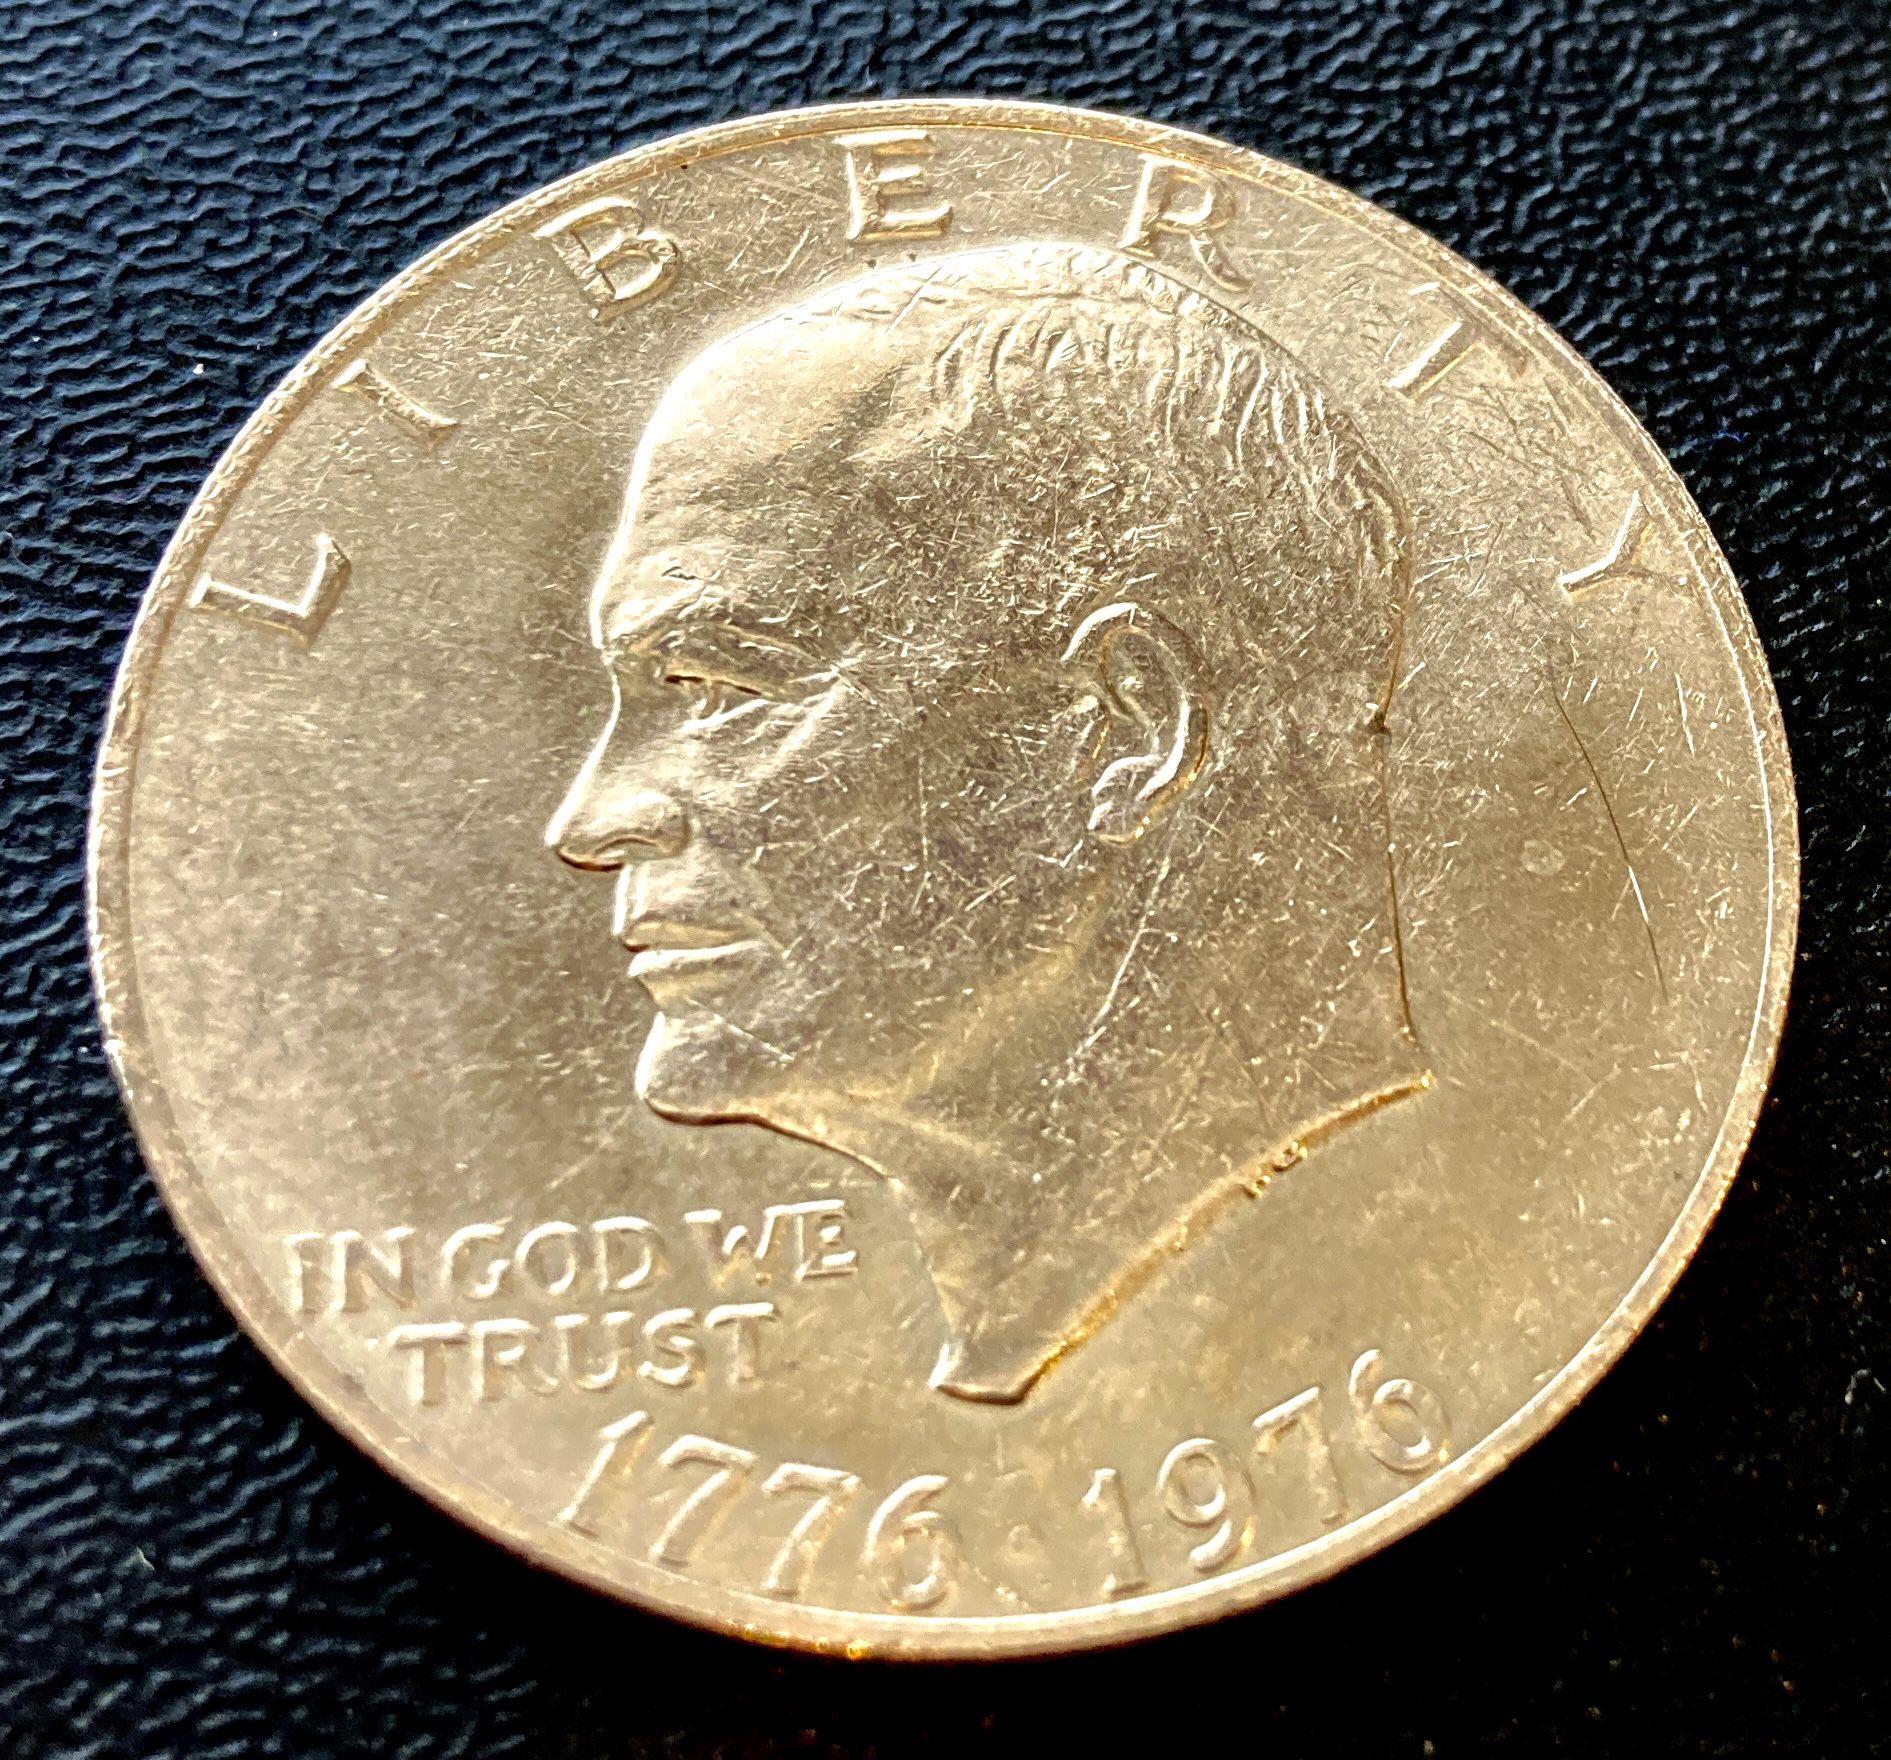 Eisenhower Large 1976 Bicentennial 1776 Ike Silver Dollar US Coin Coins